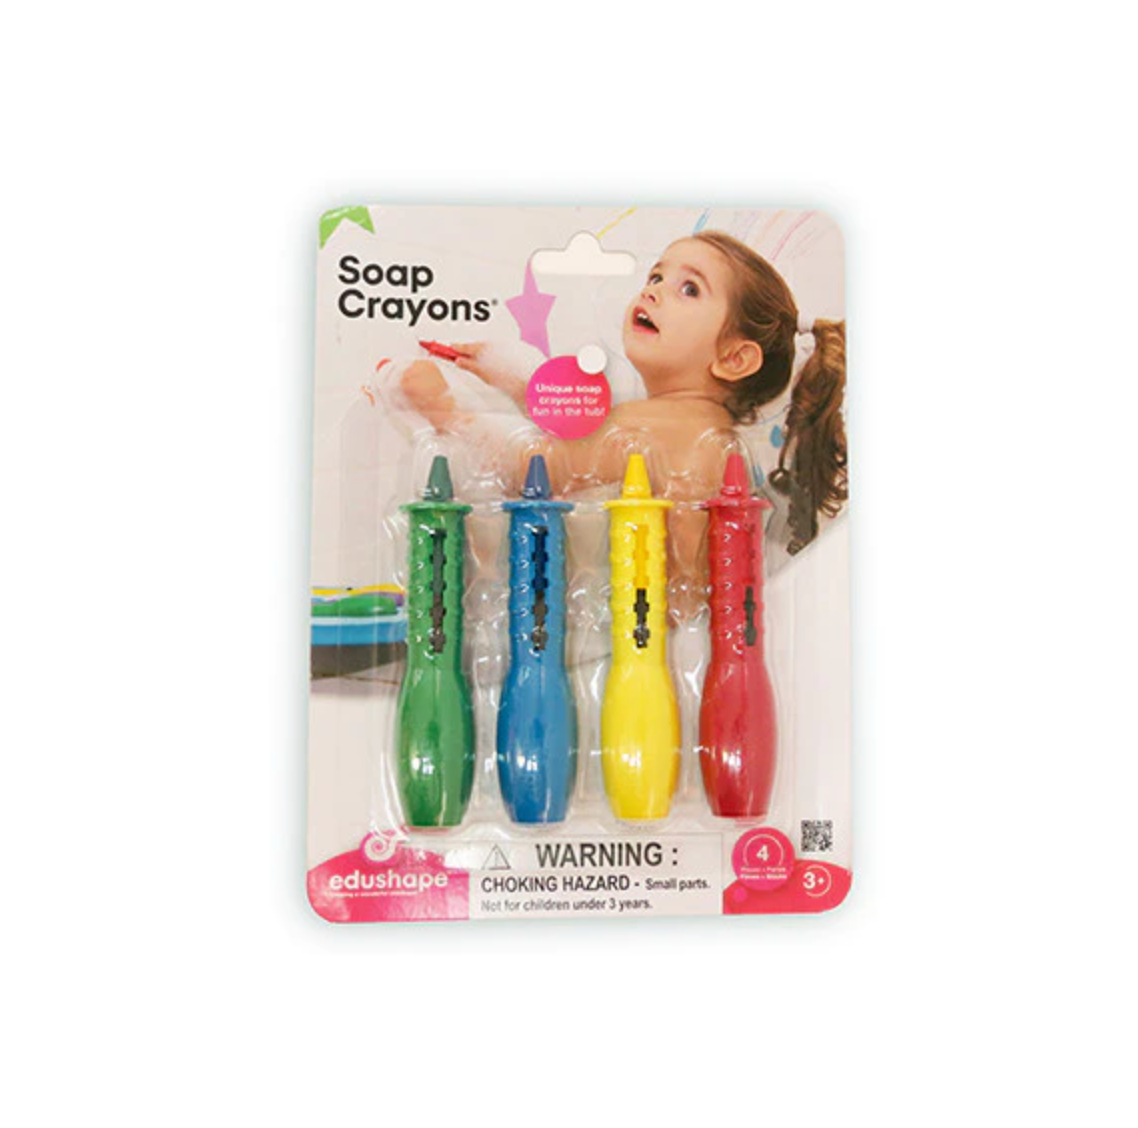 Soap Crayons Bathtime Fun - Crown Office Supplies